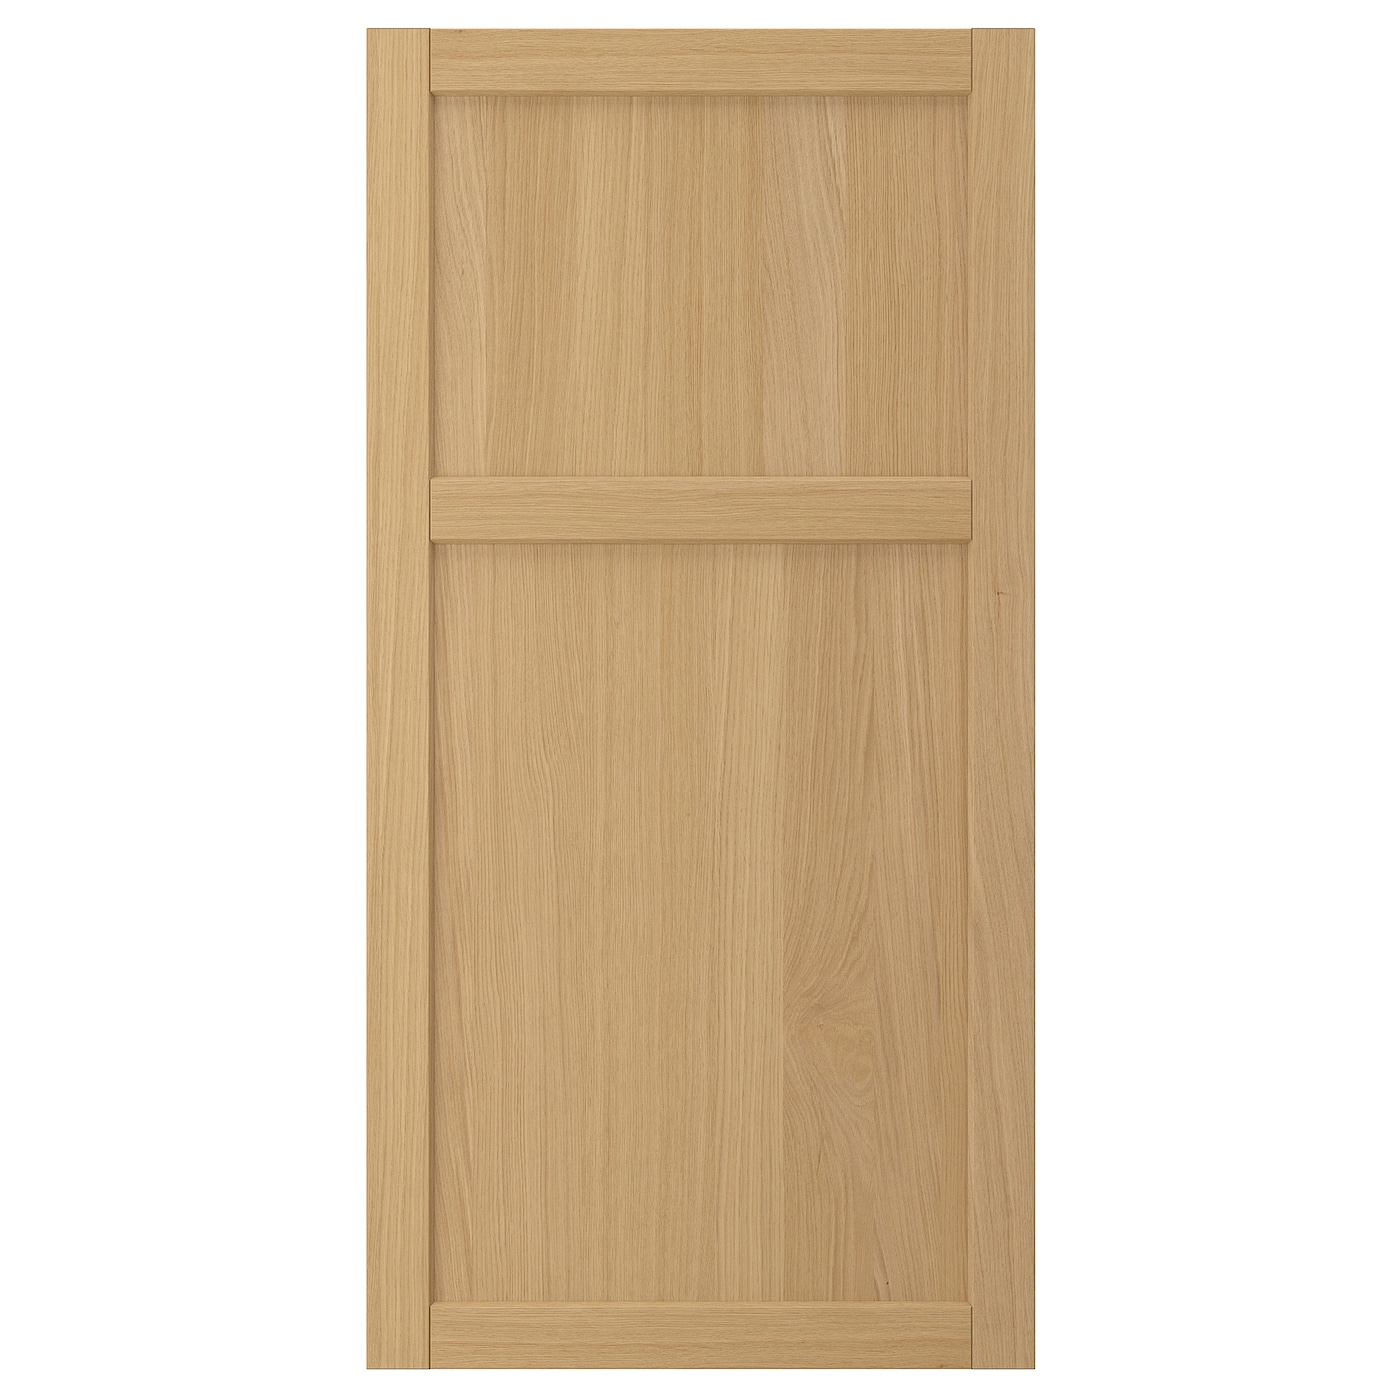 Дверца - FORSBACKA IKEA/ ФОРСБАКА ИКЕА,  120х60 см, под беленый дуб